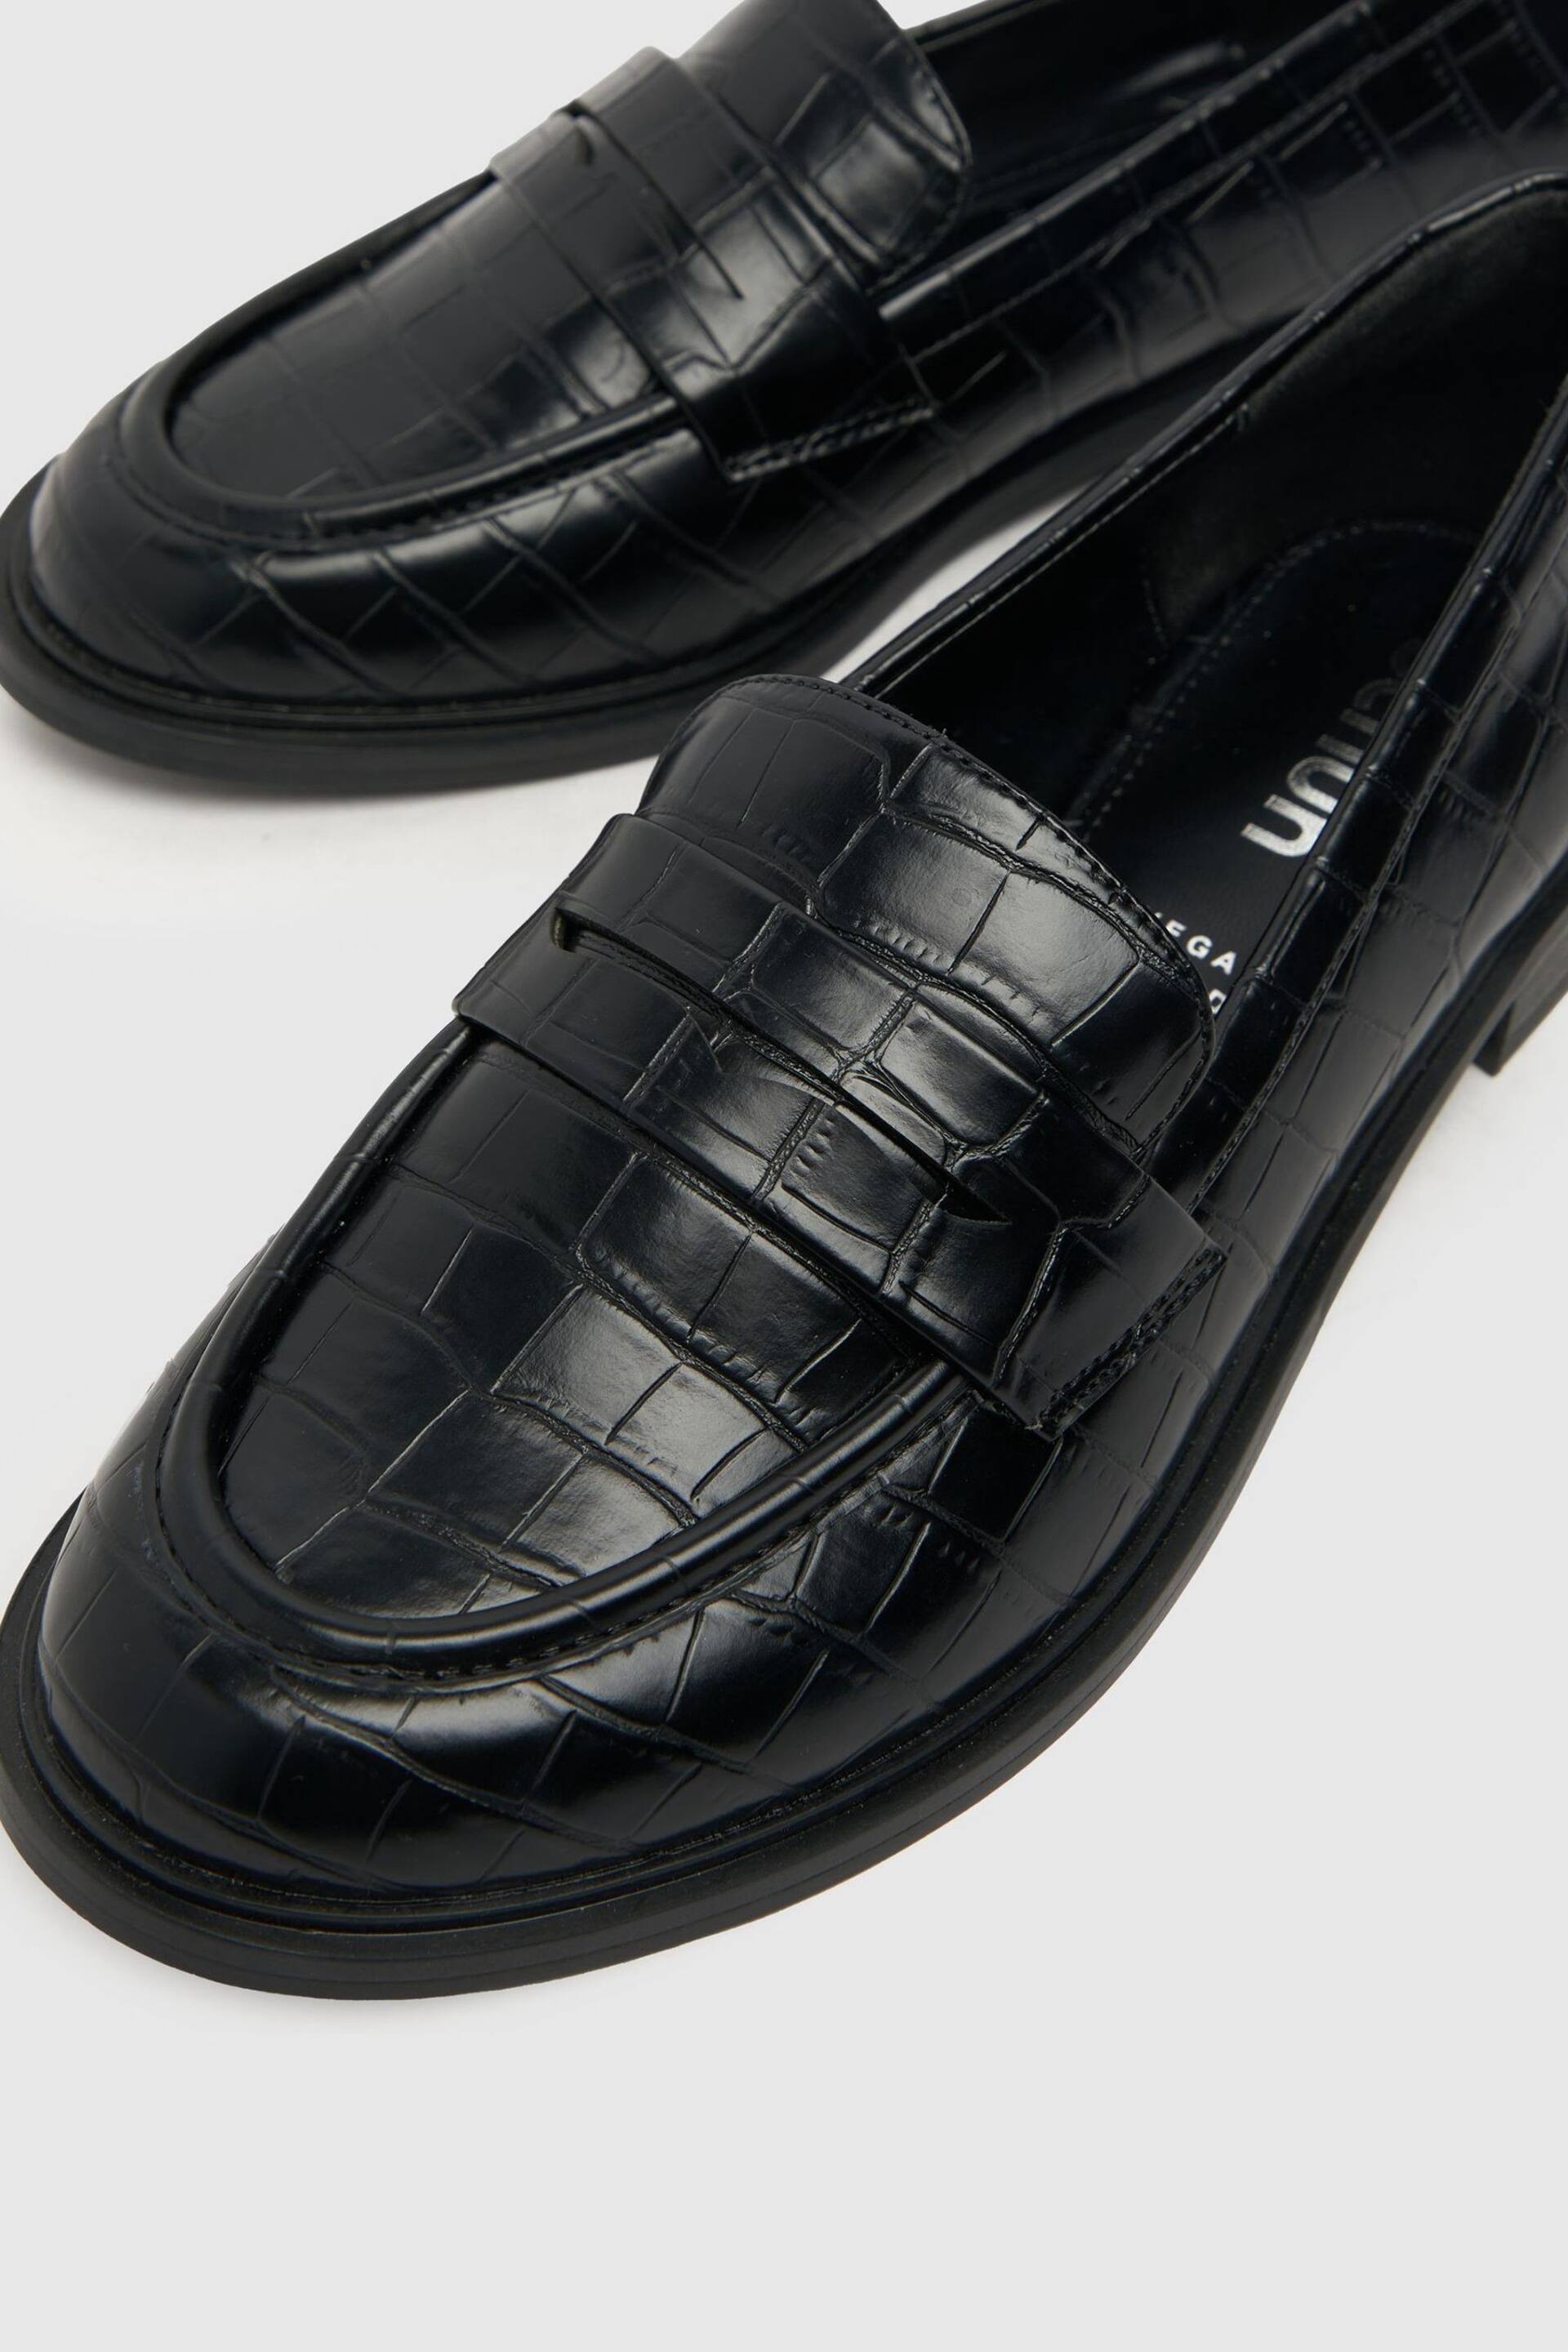 Schuh Lexa Croc-Effect Black Loafers - Image 3 of 4